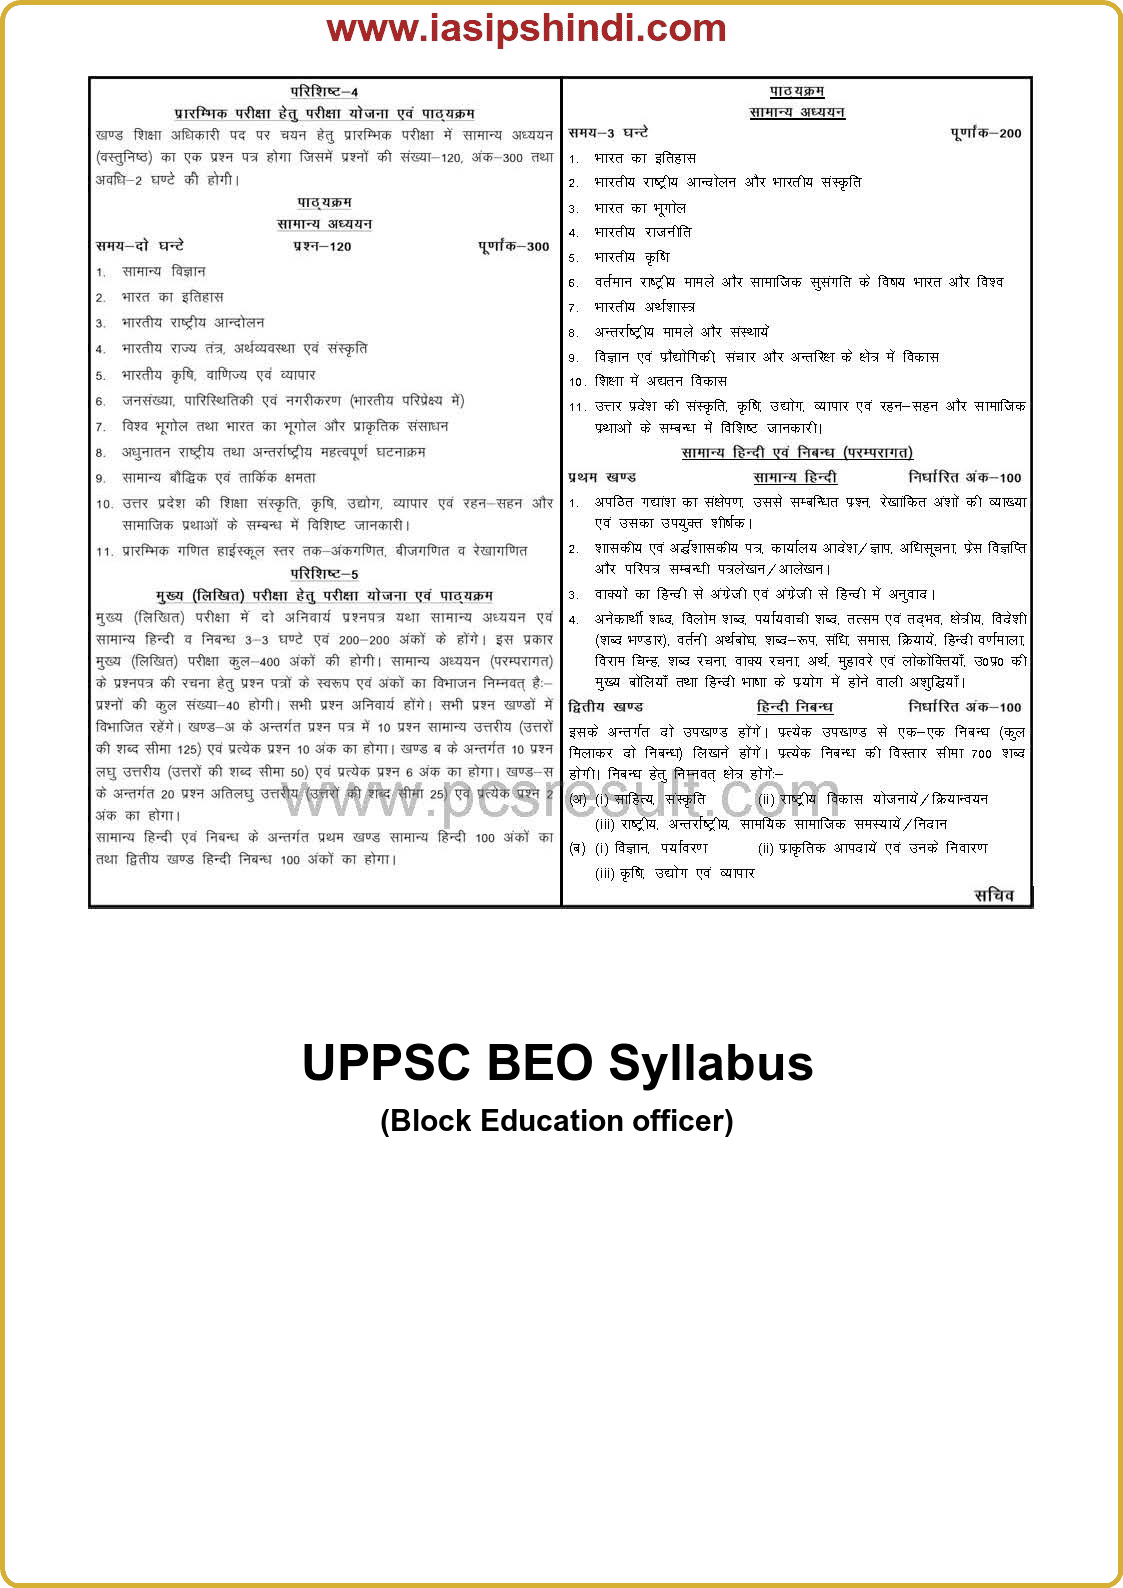 UPPSC BEO (Block Education Officer) Syllabus in Hindi